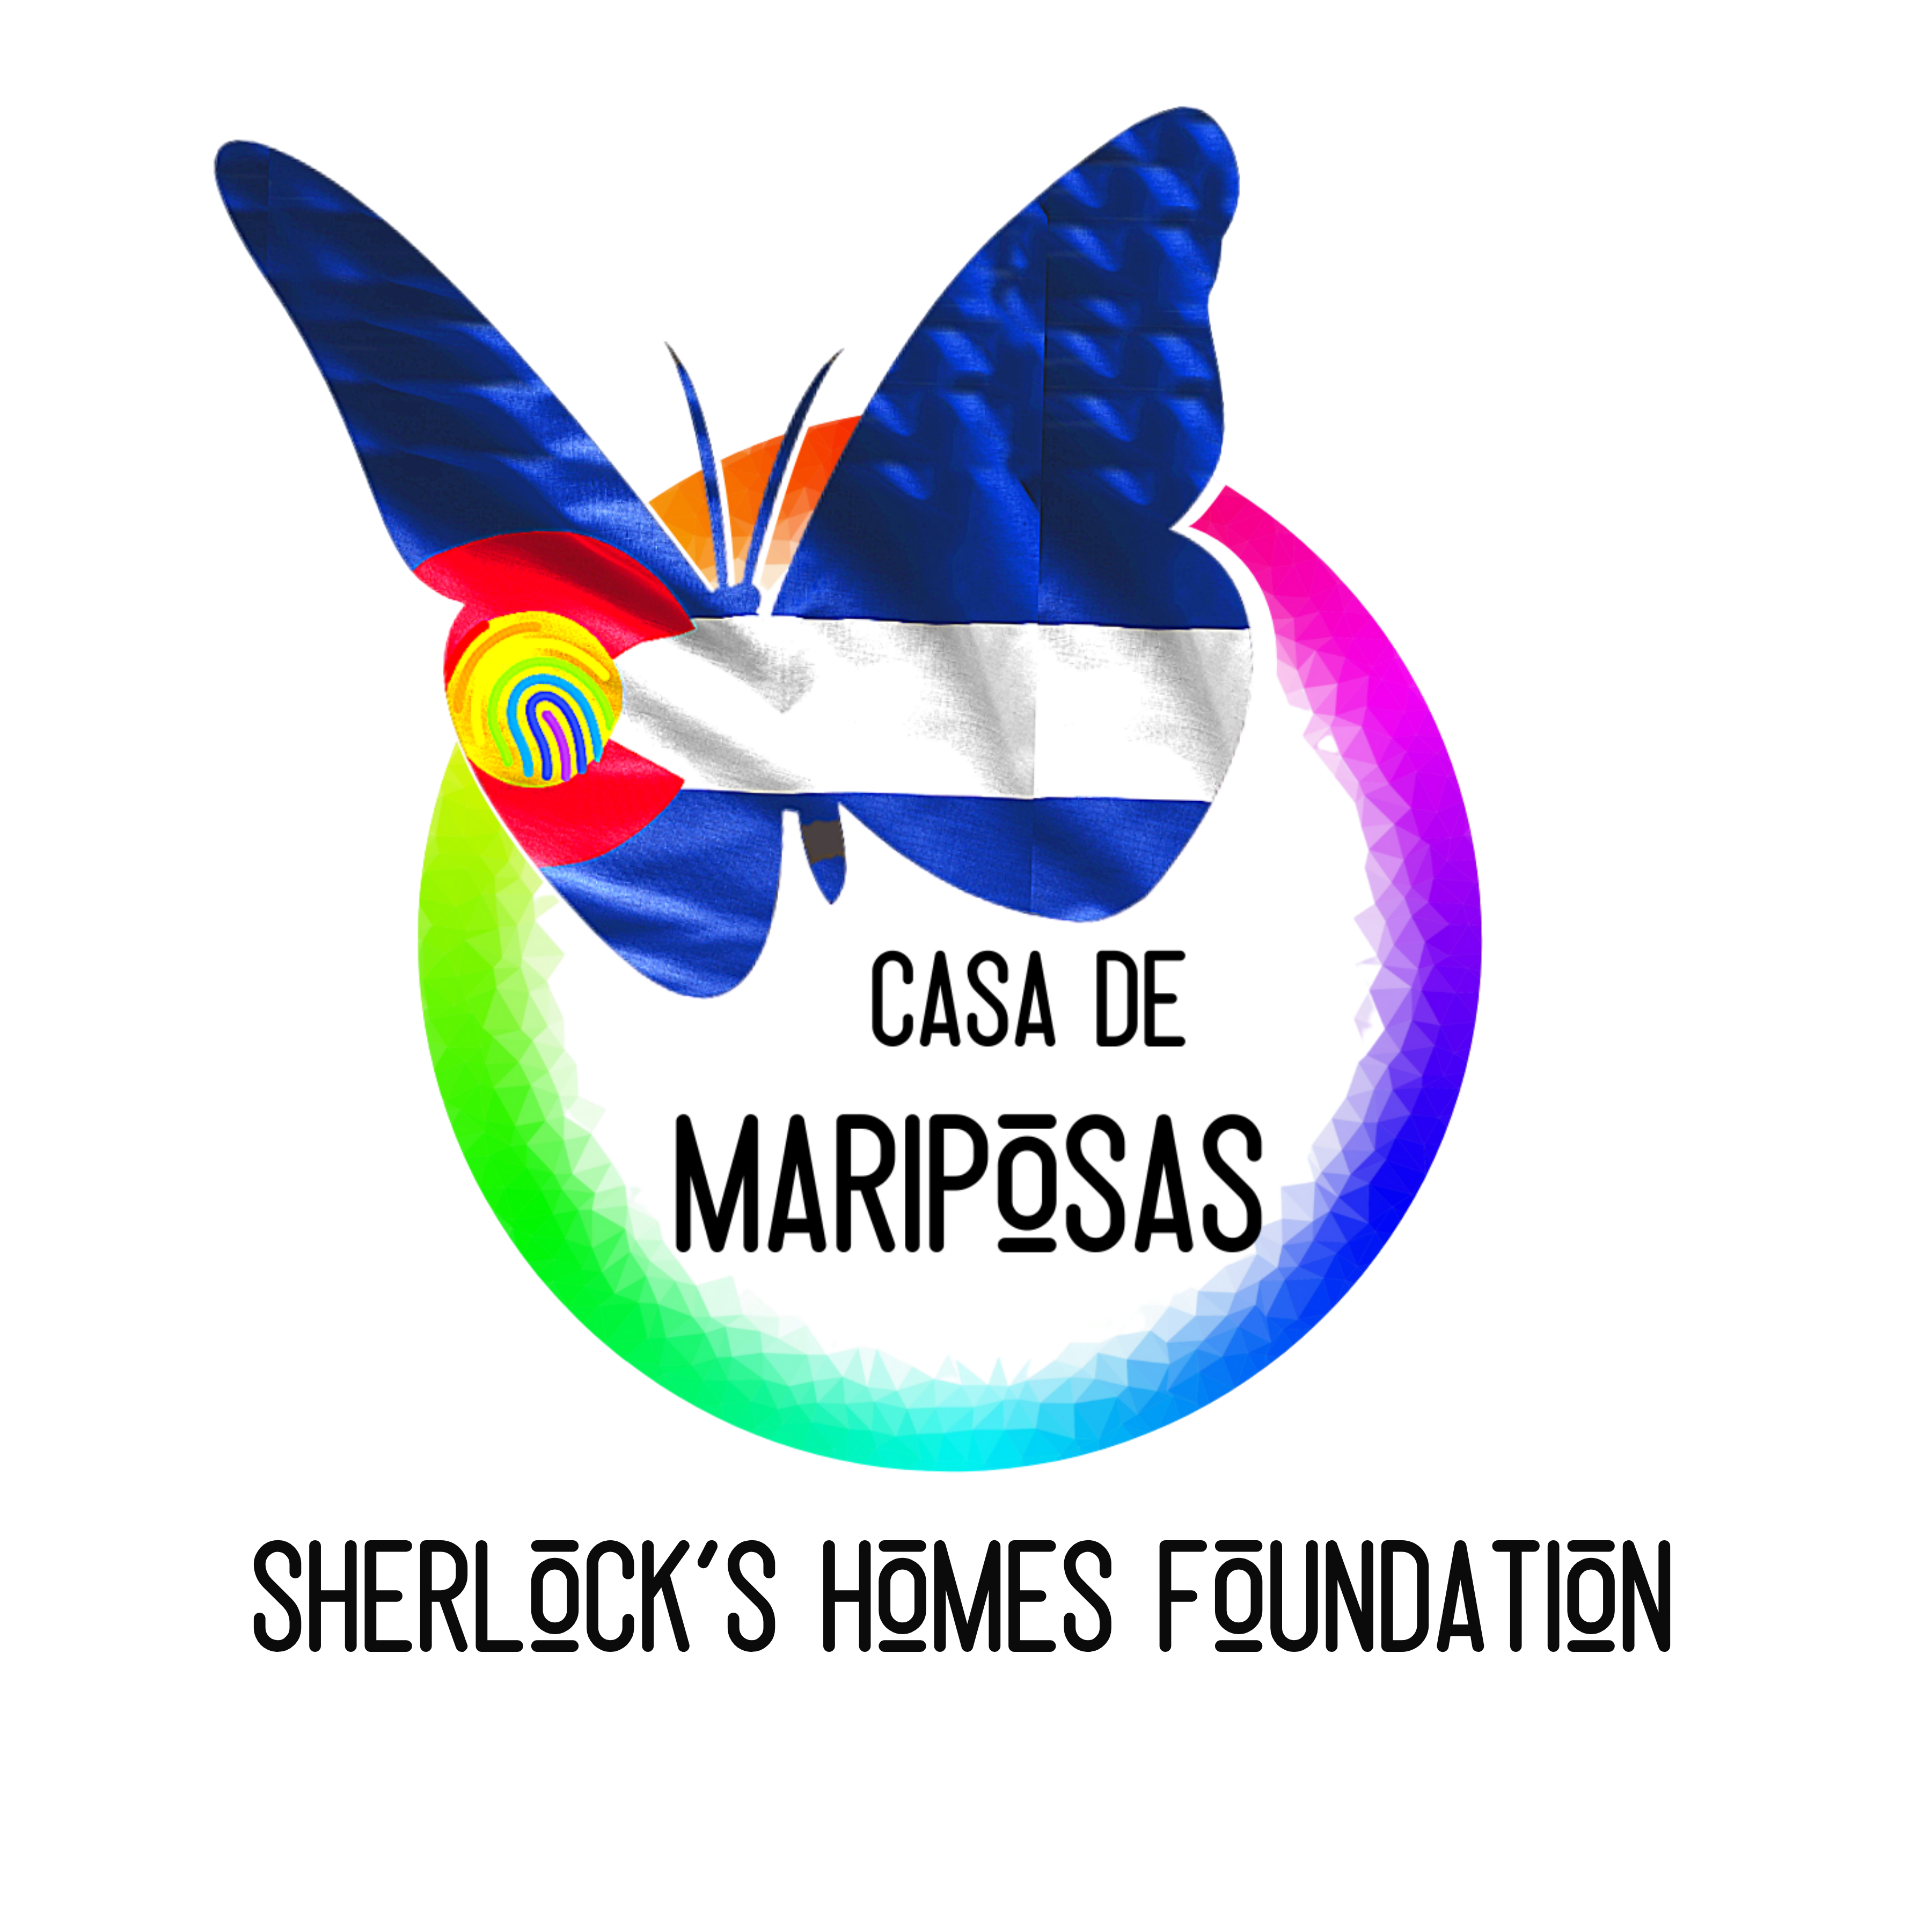 Sherlock's Homes Foundation - Casa De Mariposas Logo